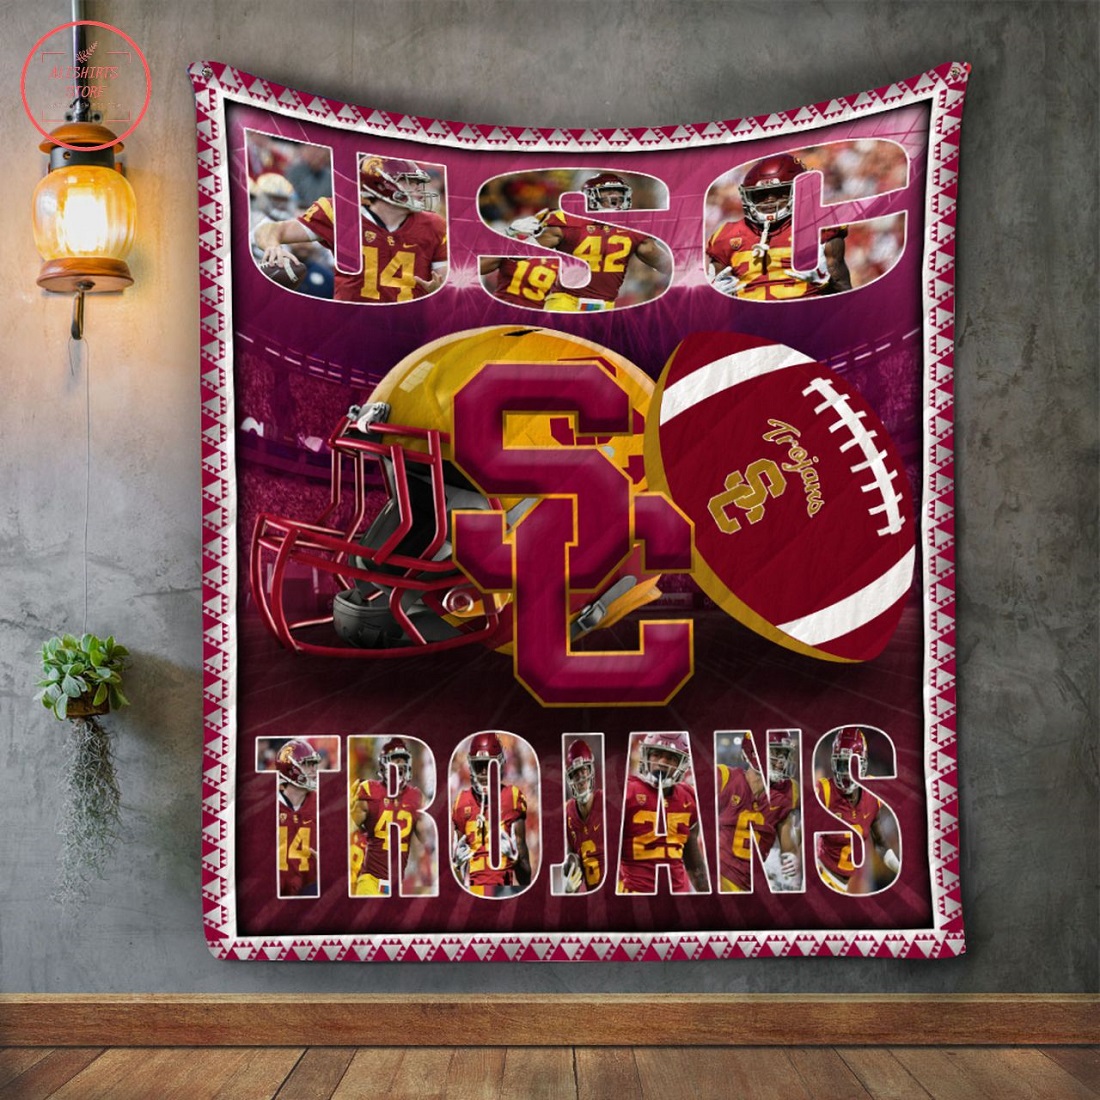 USC Trojans NCAA Football Quilt Blanket